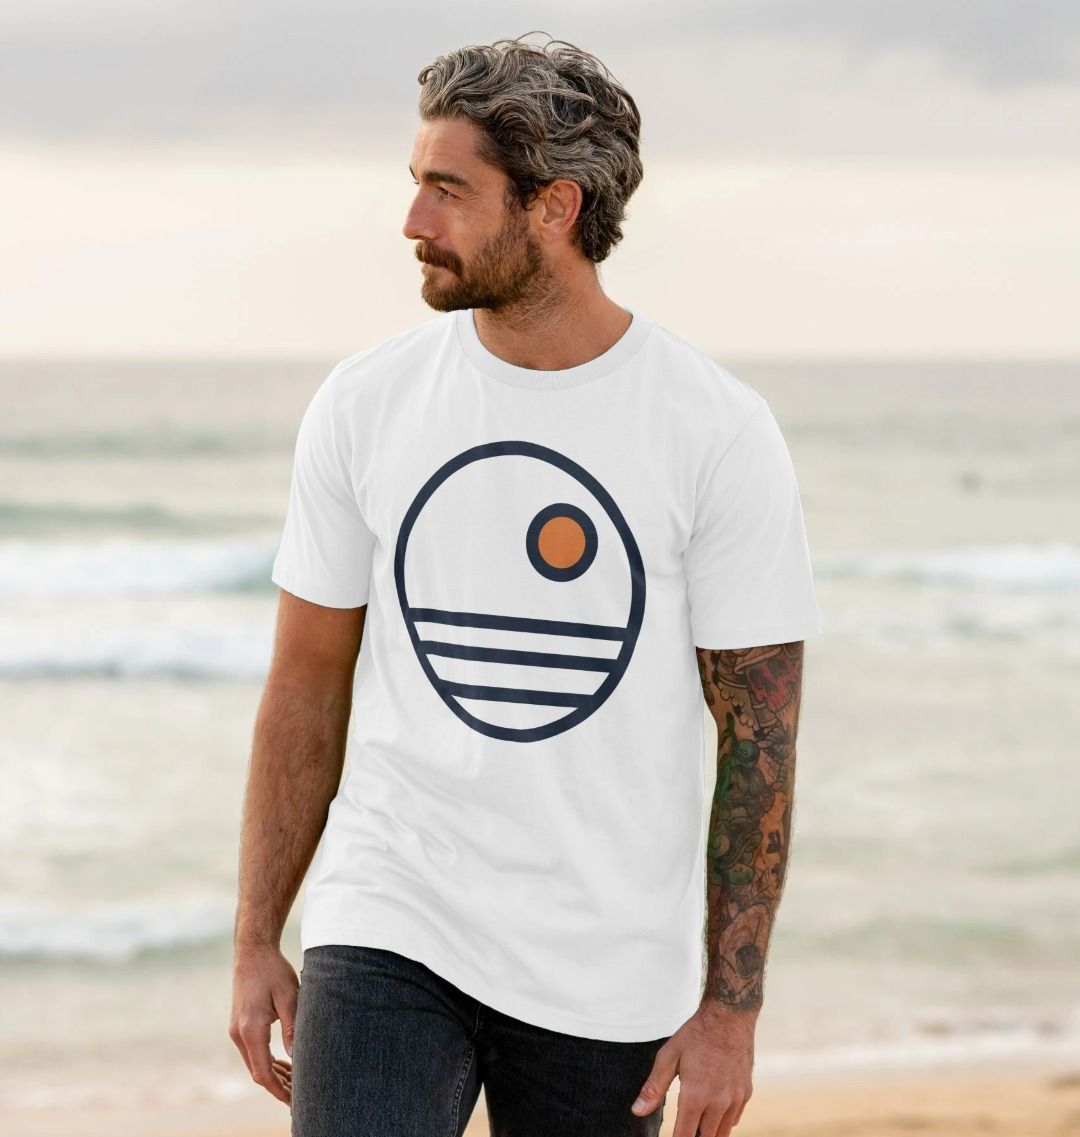 Sunset Surf T - shirt - Printed T - shirt